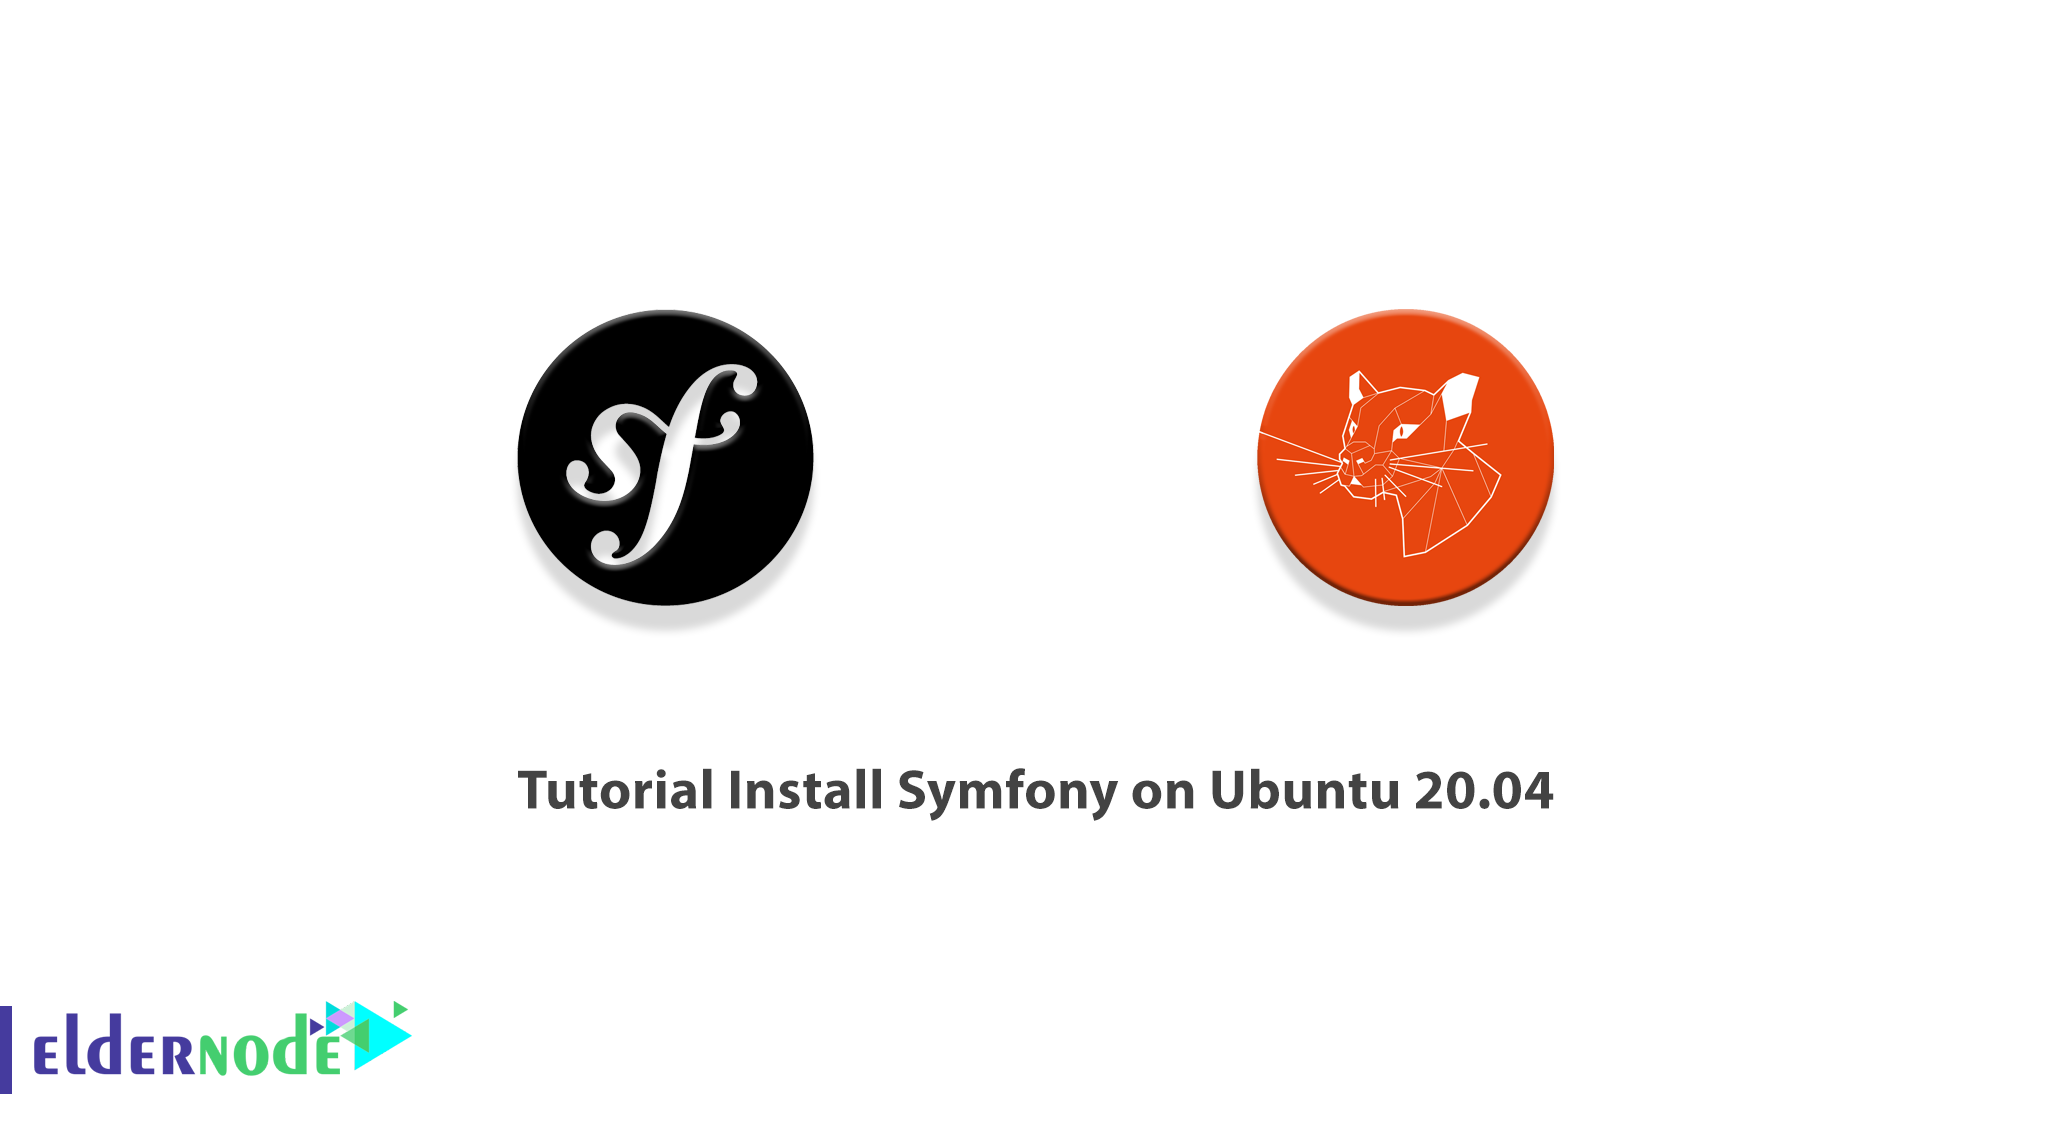 Tutorial Install Symfony on Ubuntu 20.04